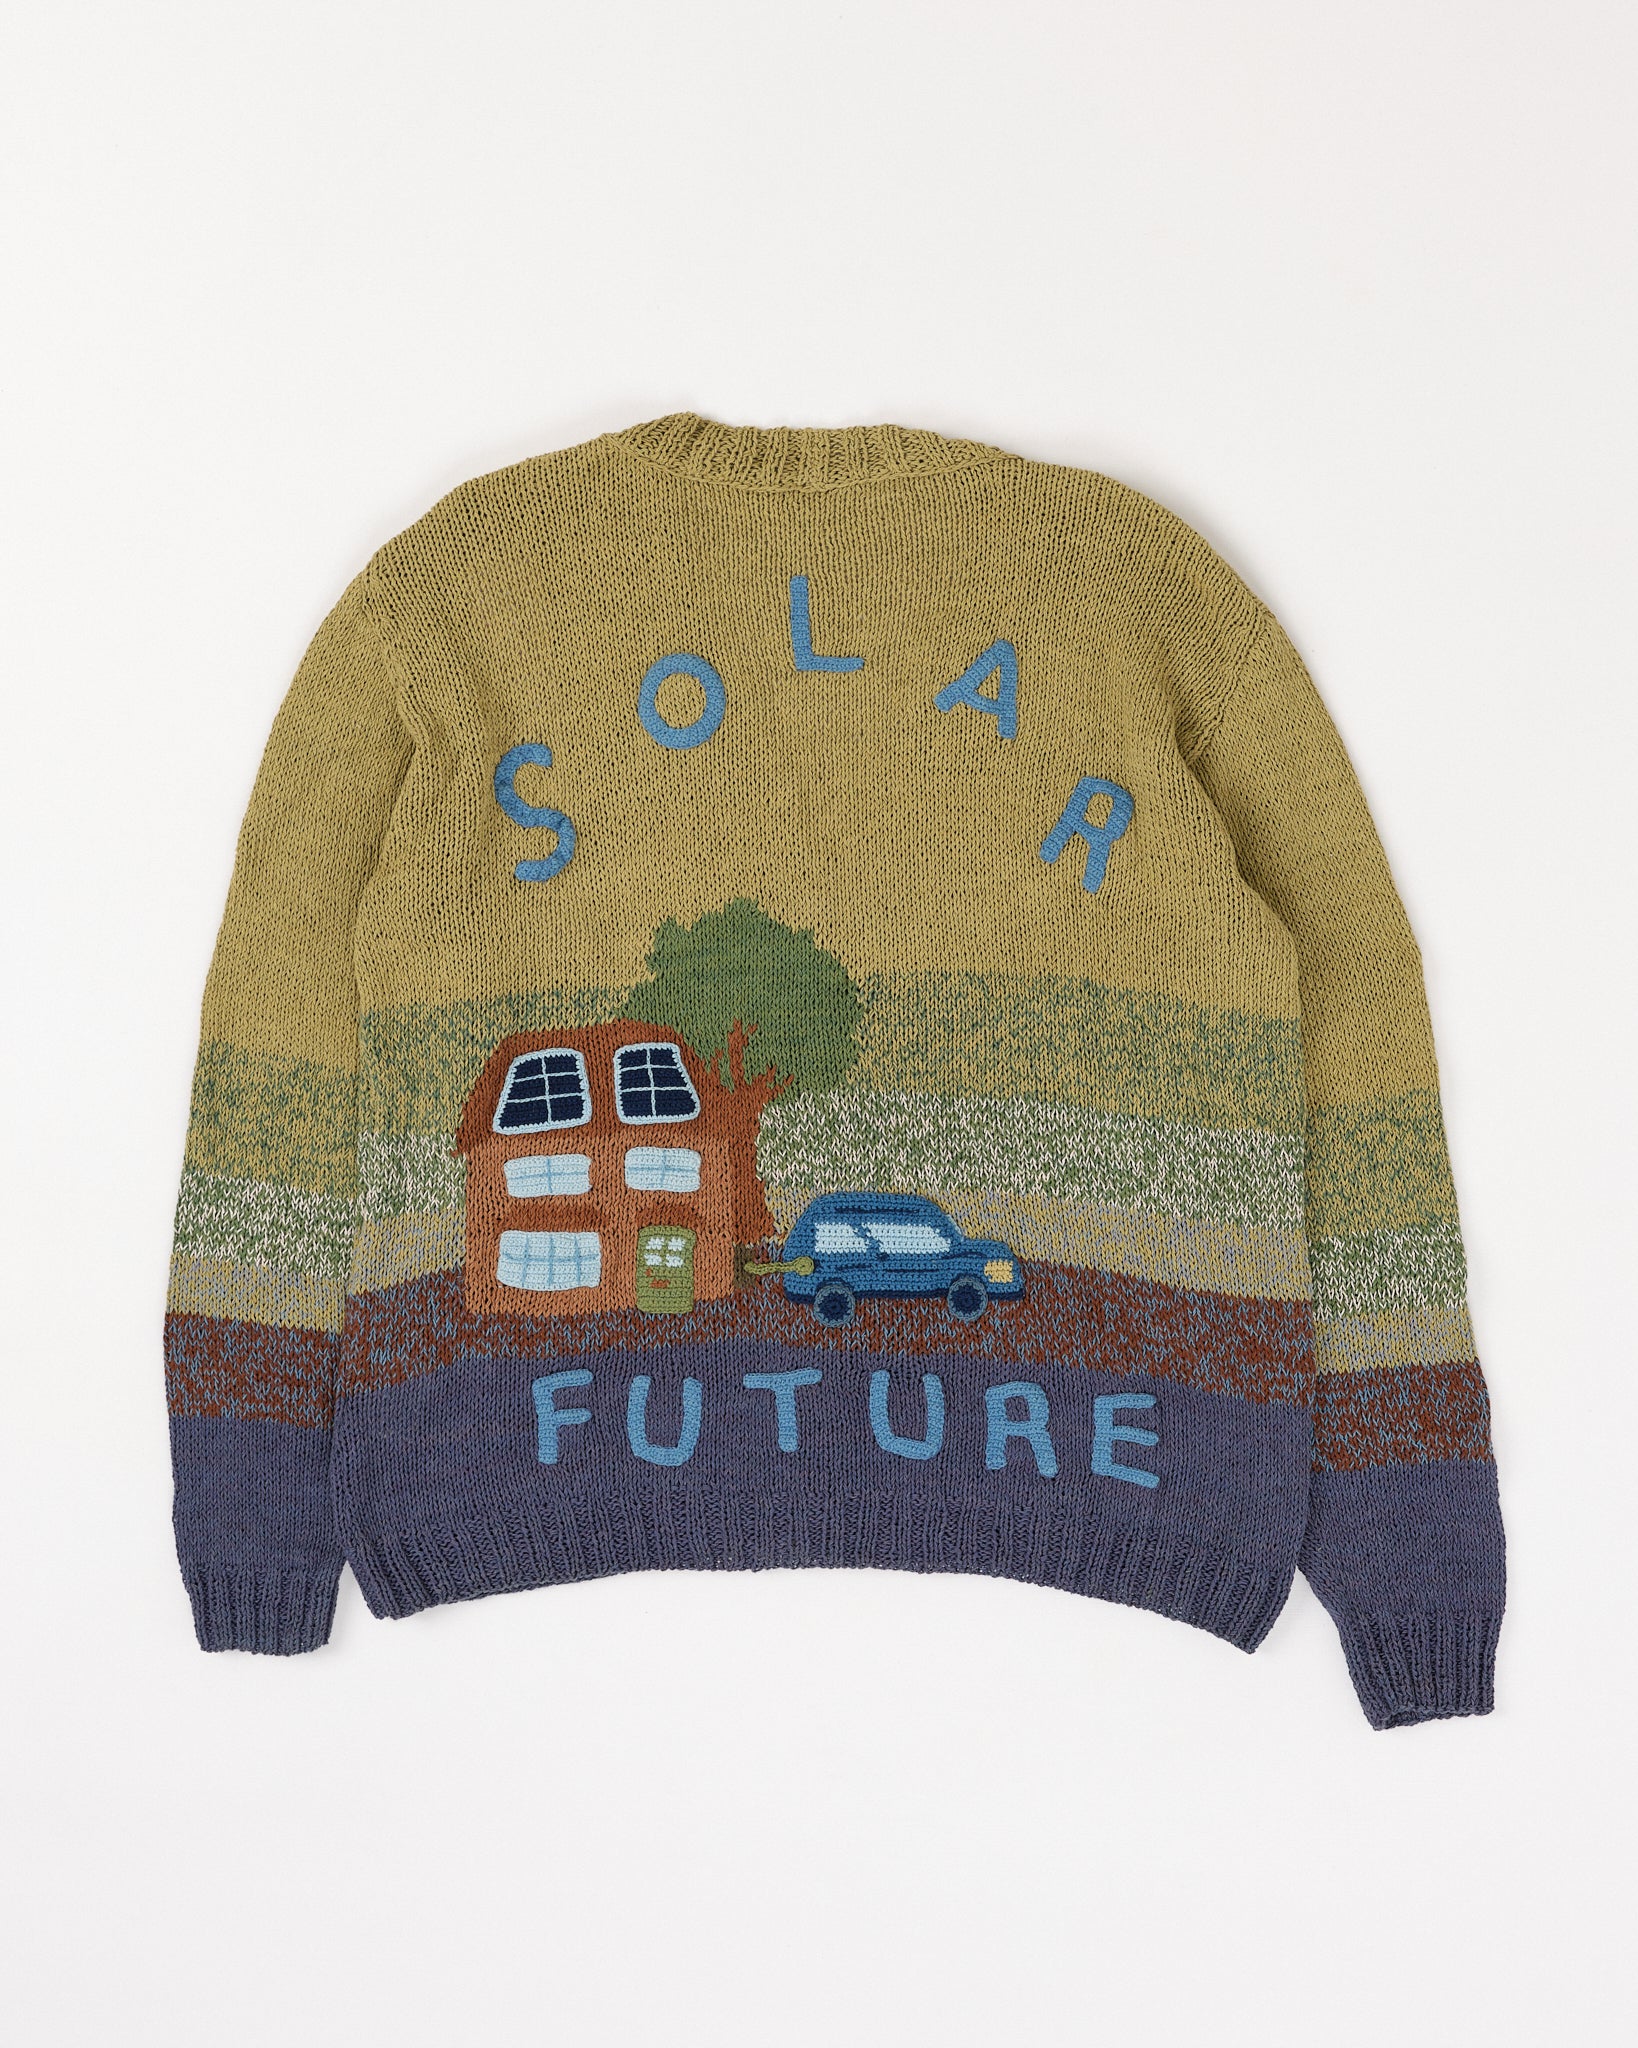 Twinsun Knit Cardigan - Sage Solar Future